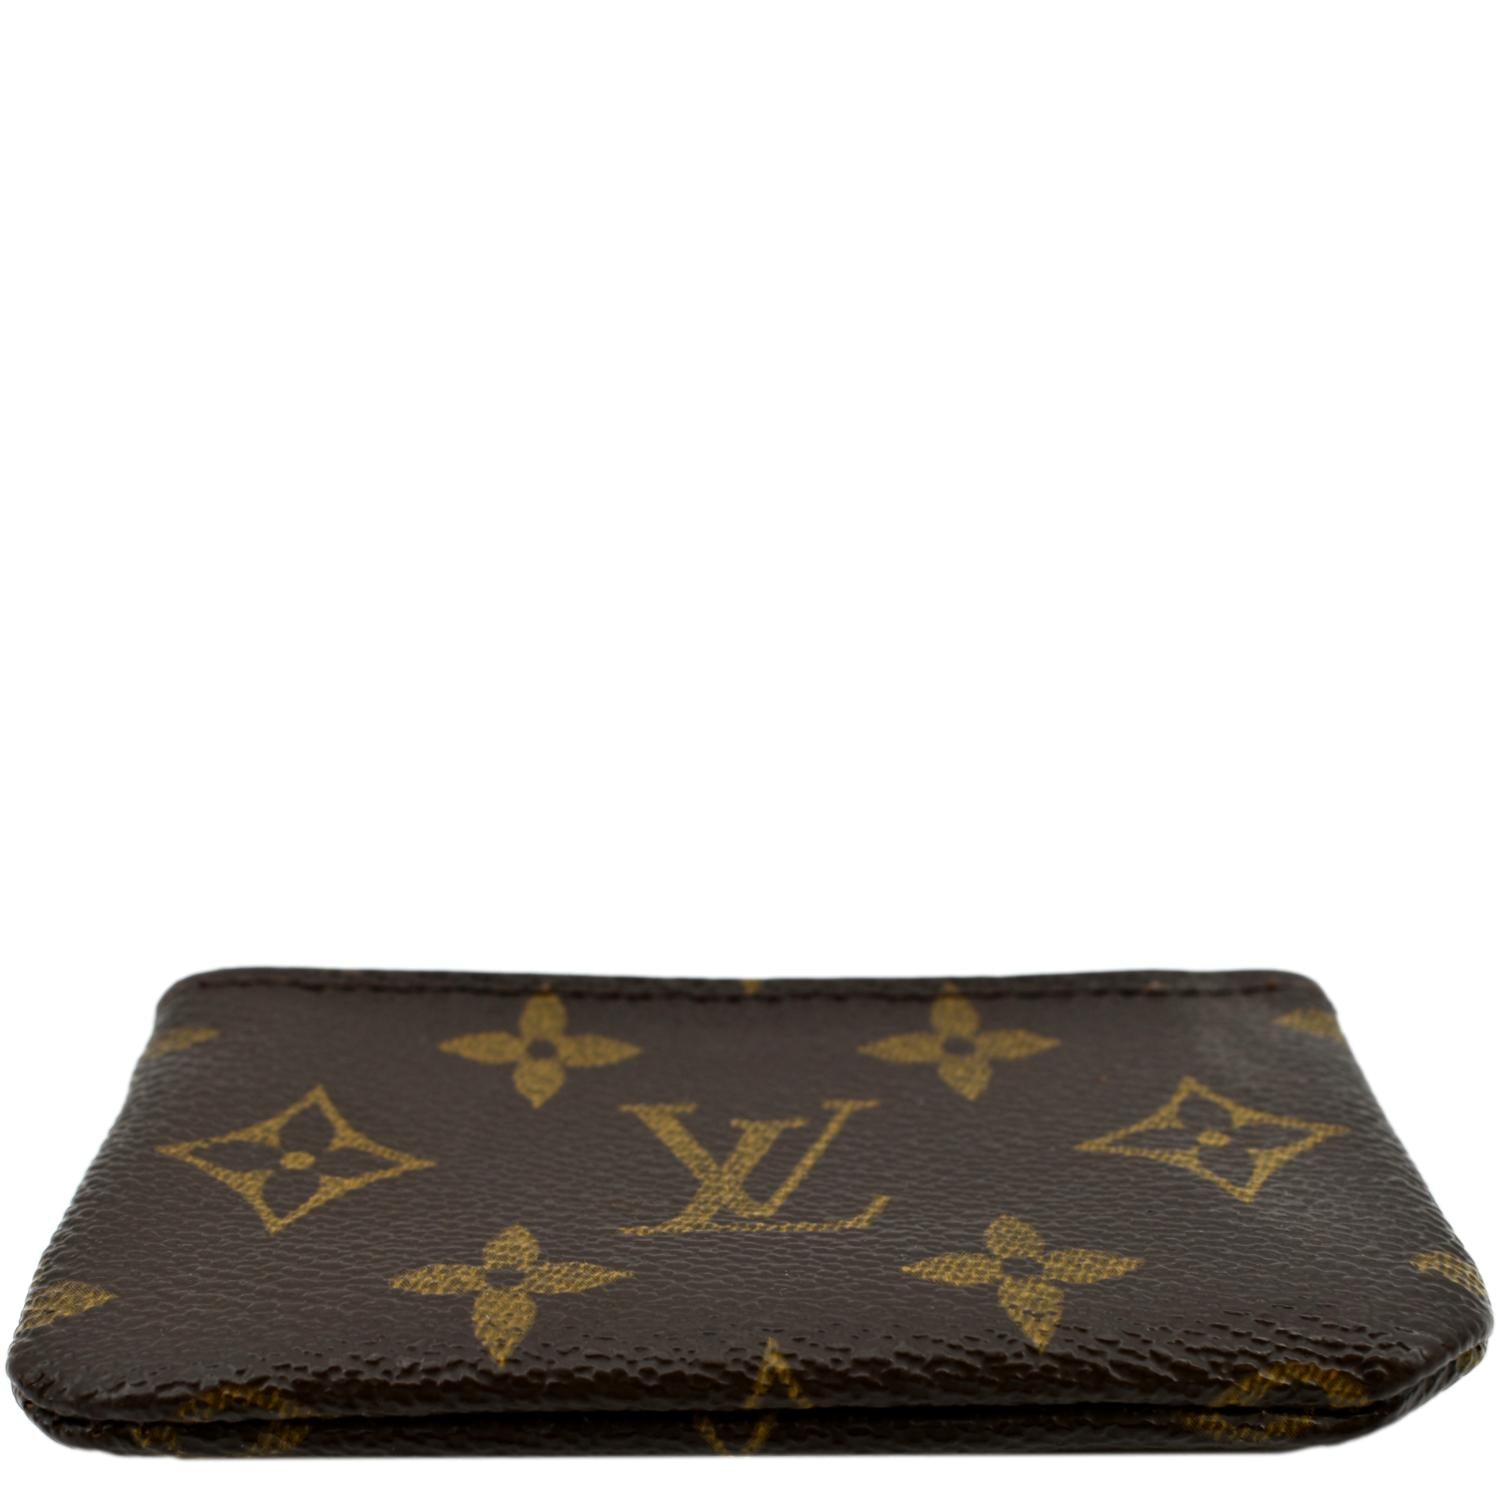 Bags, Louis Vuitton Monogram Key Clay